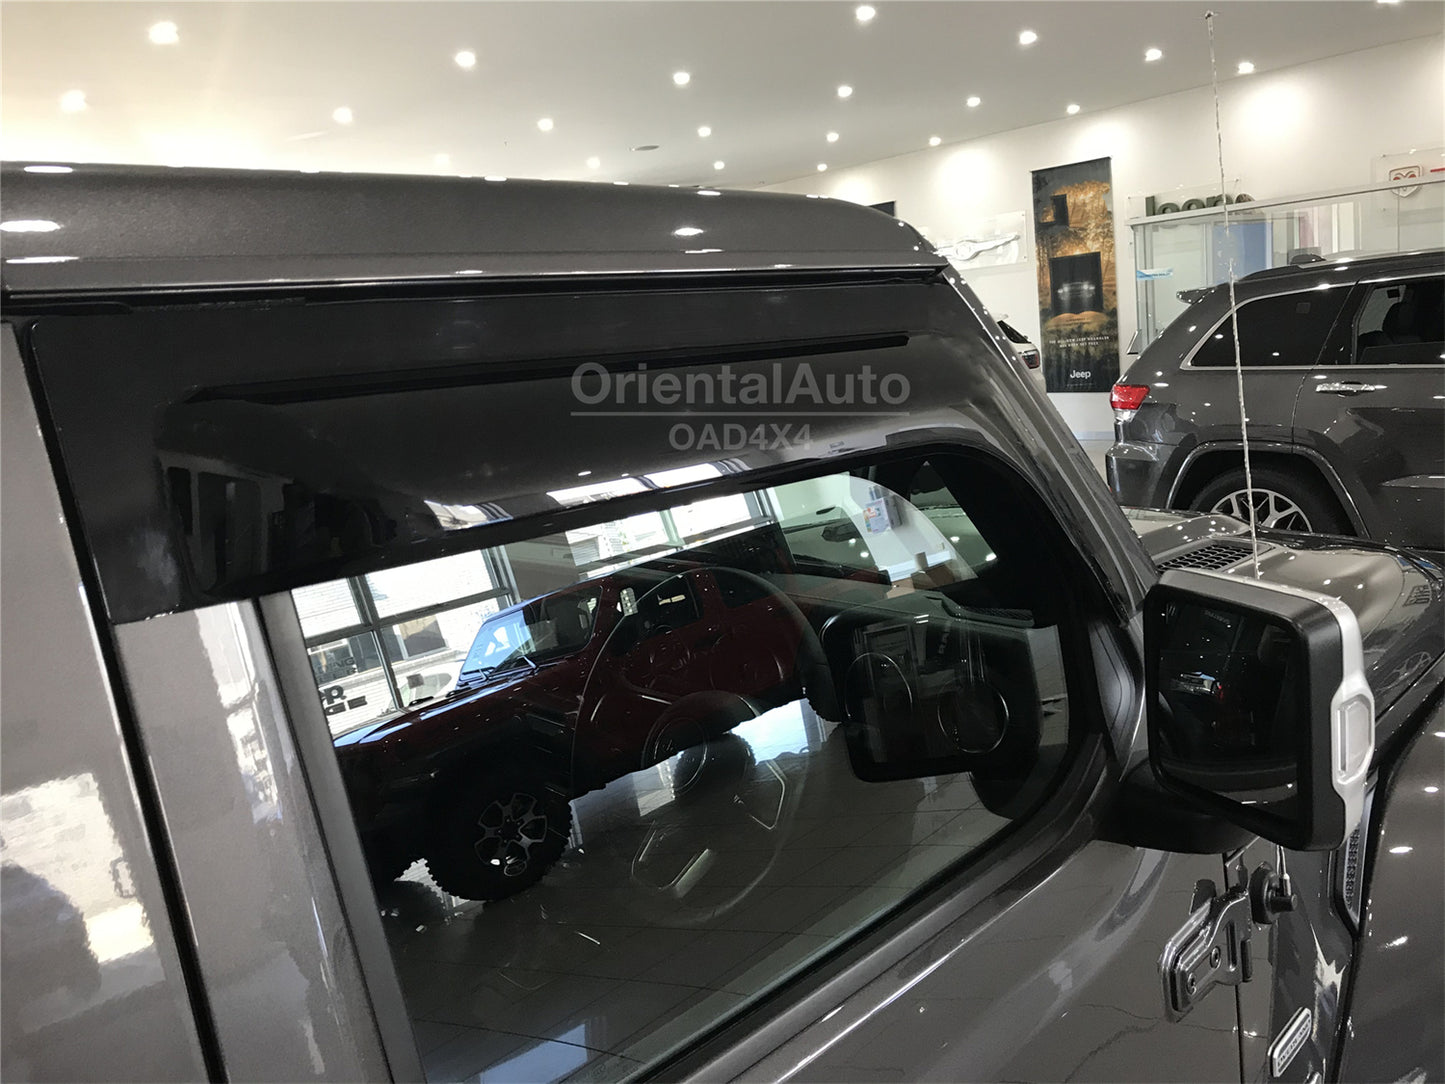 Injection Modeling Bonnet Protector & NEW Luxury 2pcs Weathershield for Jeep Wrangler JL Series 2 Door 2018+ Weather Shields Window Visor + Hood Protector Bonnet Guard